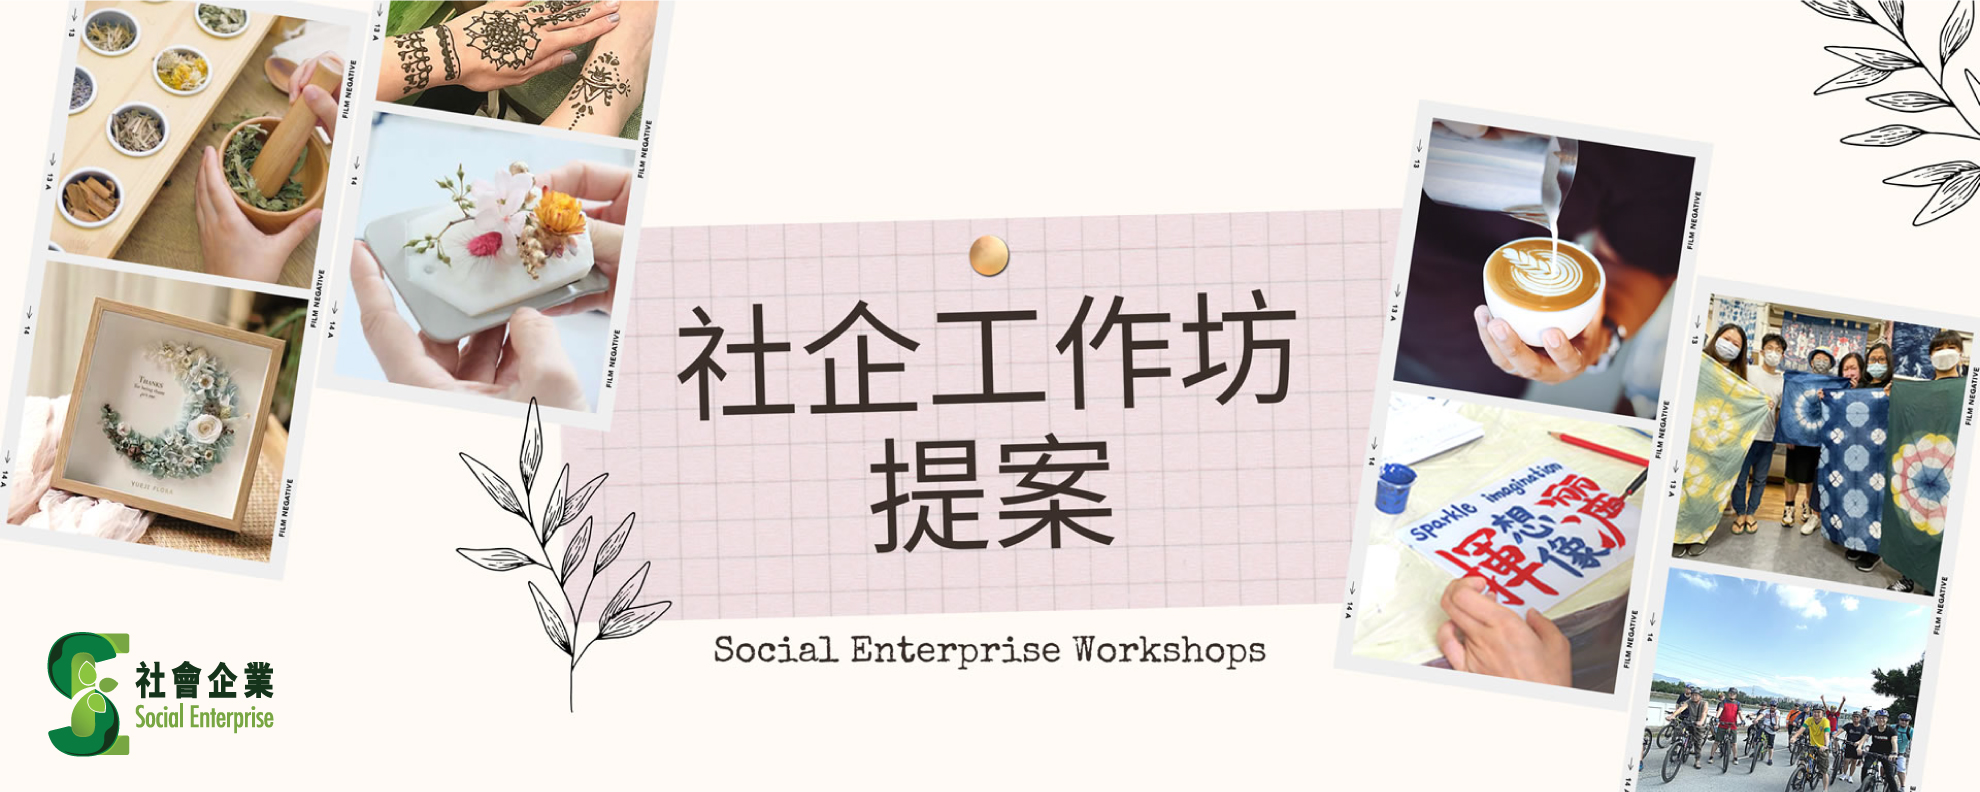 Social Enterprise Workshops news